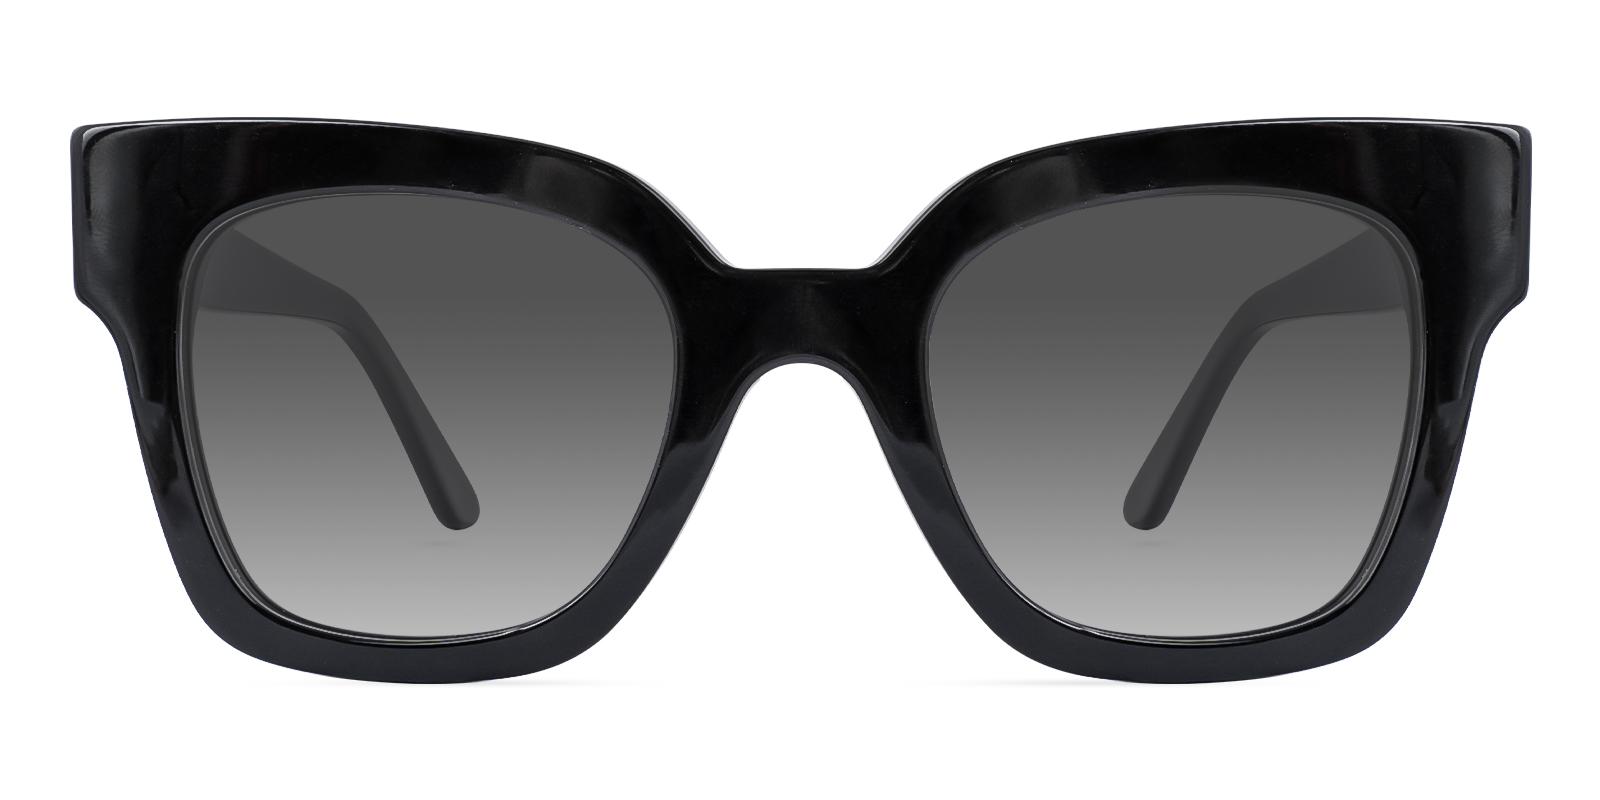 Sceneate Black Acetate Sunglasses , UniversalBridgeFit Frames from ABBE Glasses